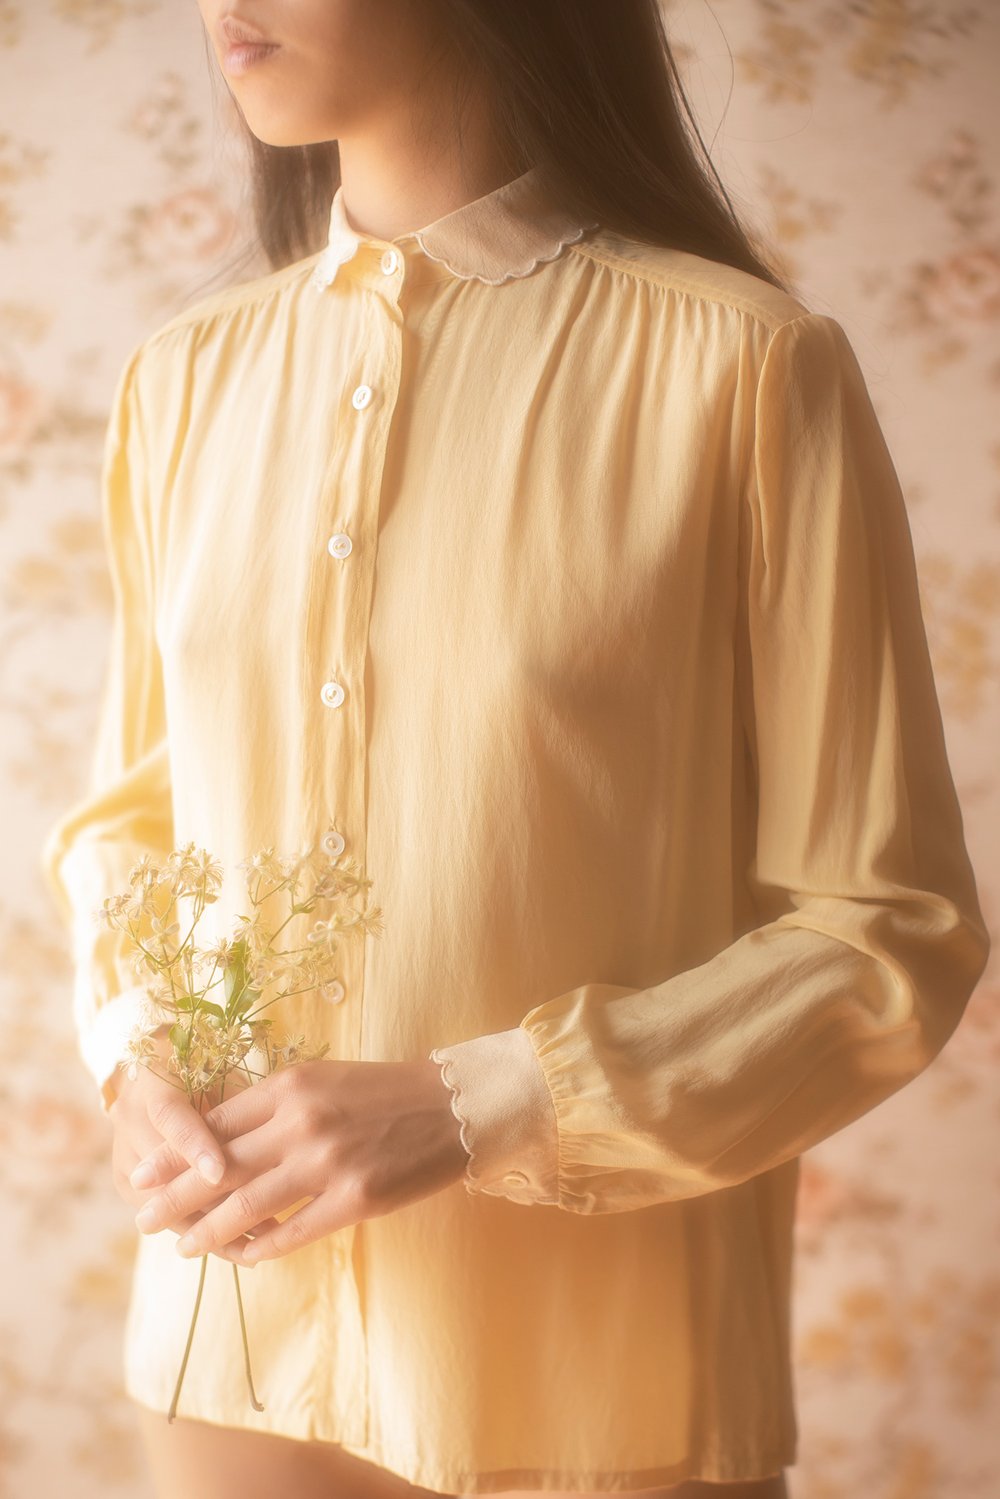 Lovely Vintage Pastel Yellow Louis Feraud Silk Shirt — Vivienne Mok  Photography